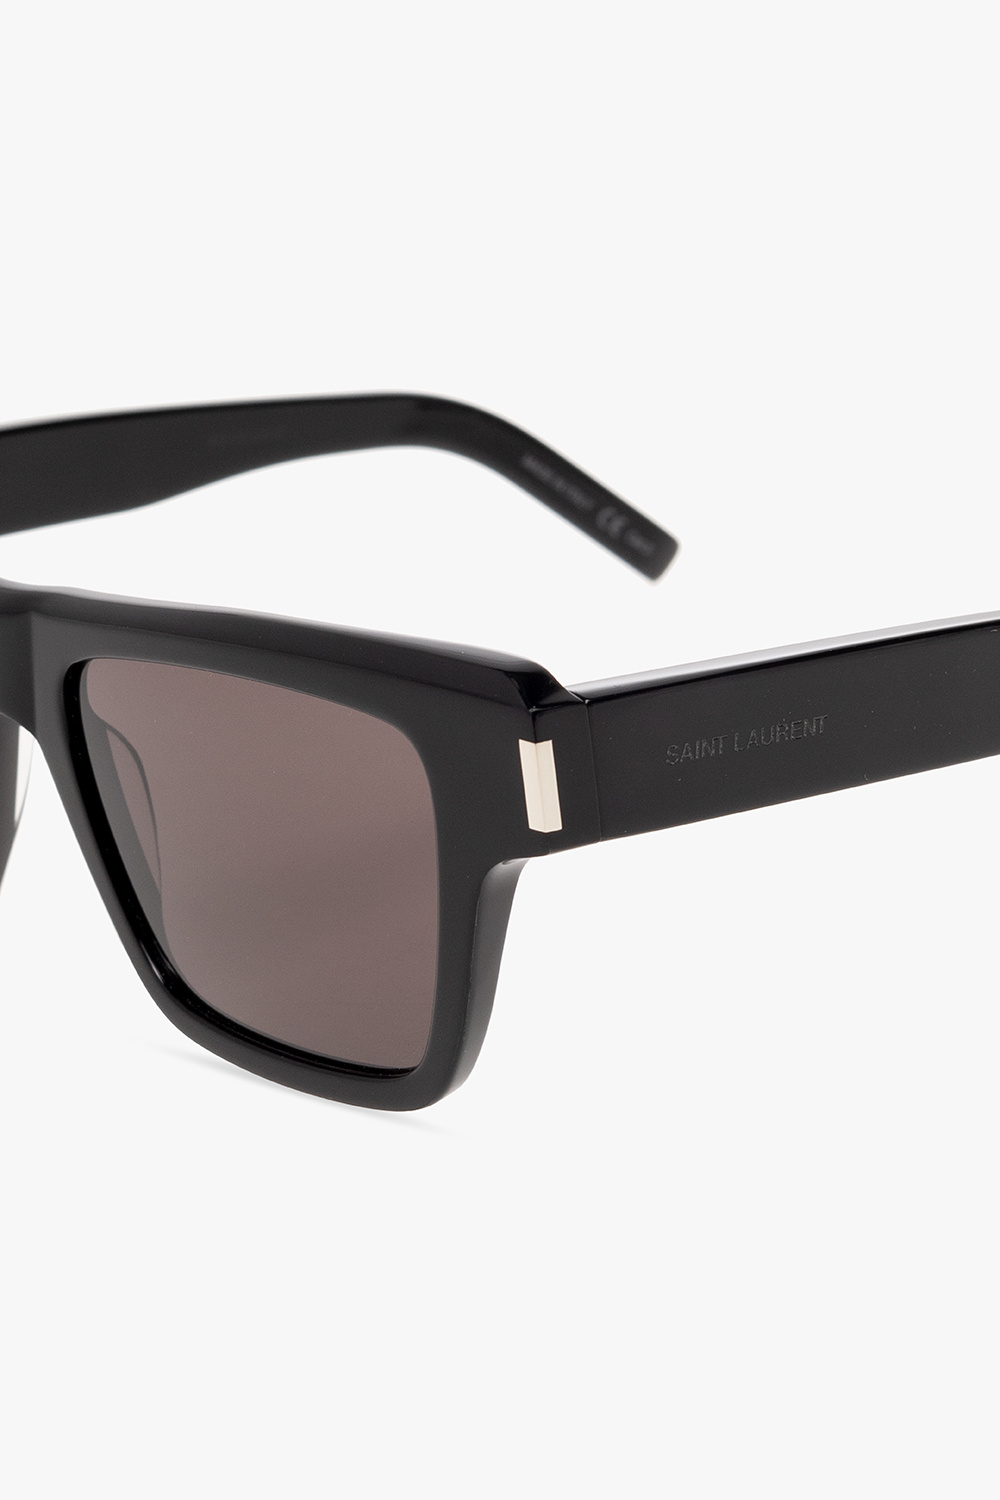 Saint Laurent ‘SL 469’ sunglasses